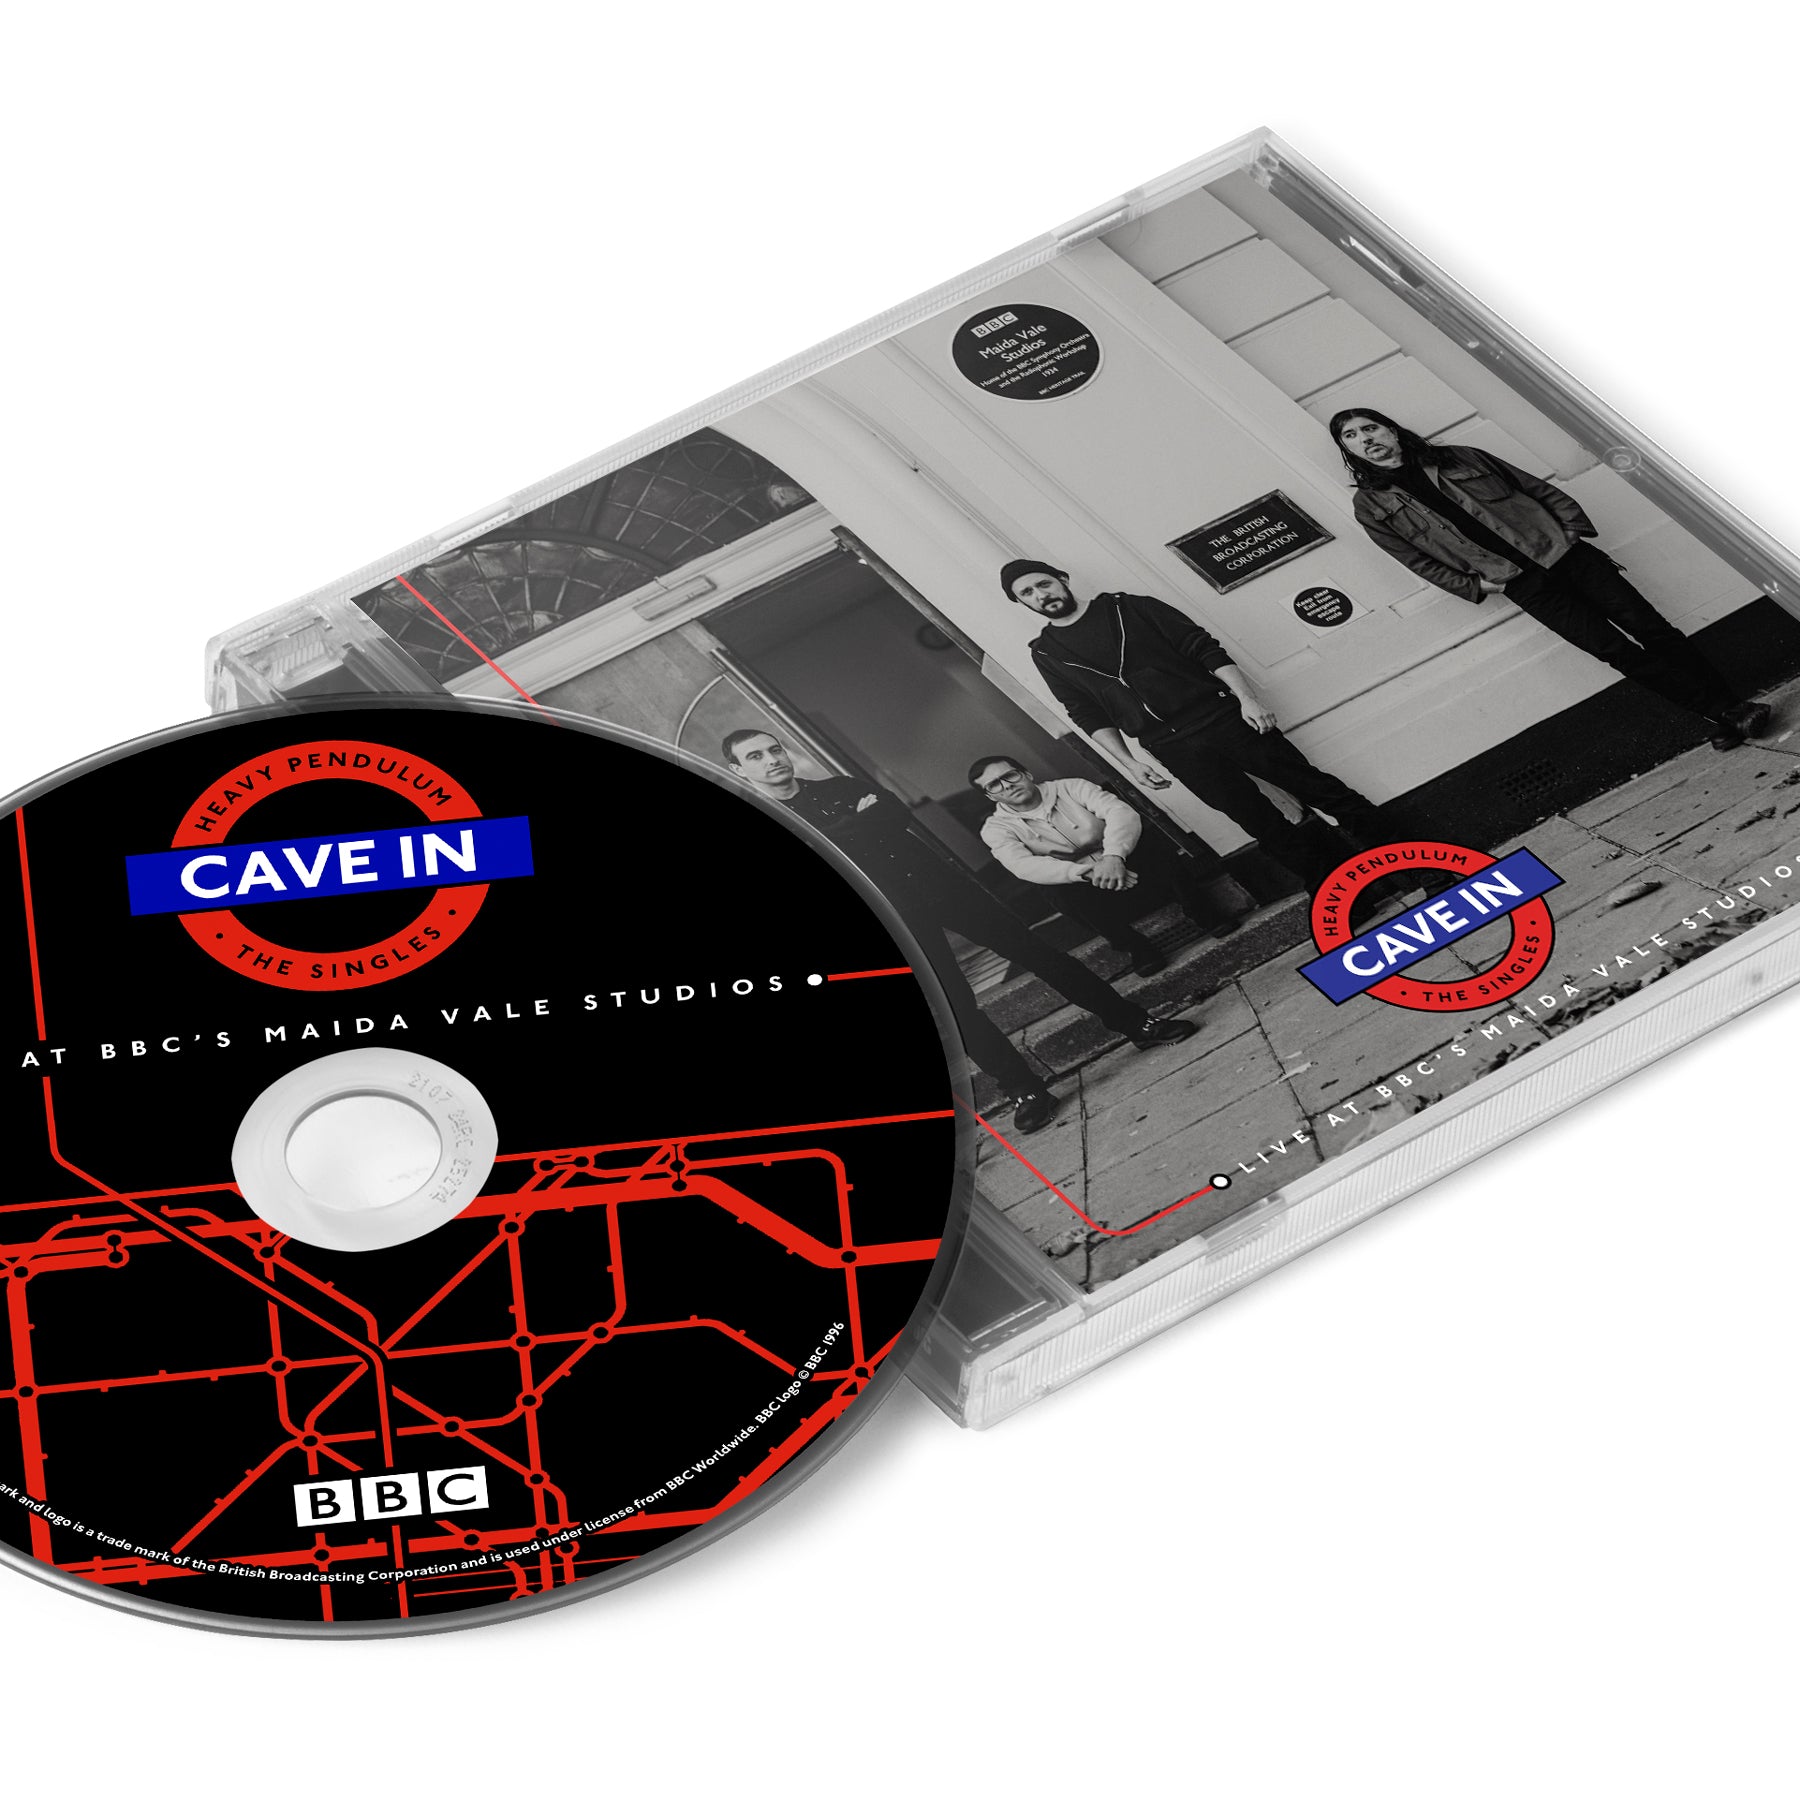 Cave In "Heavy Pendulum: The Singles - Live at BBC's Maida Vale Studios" CD